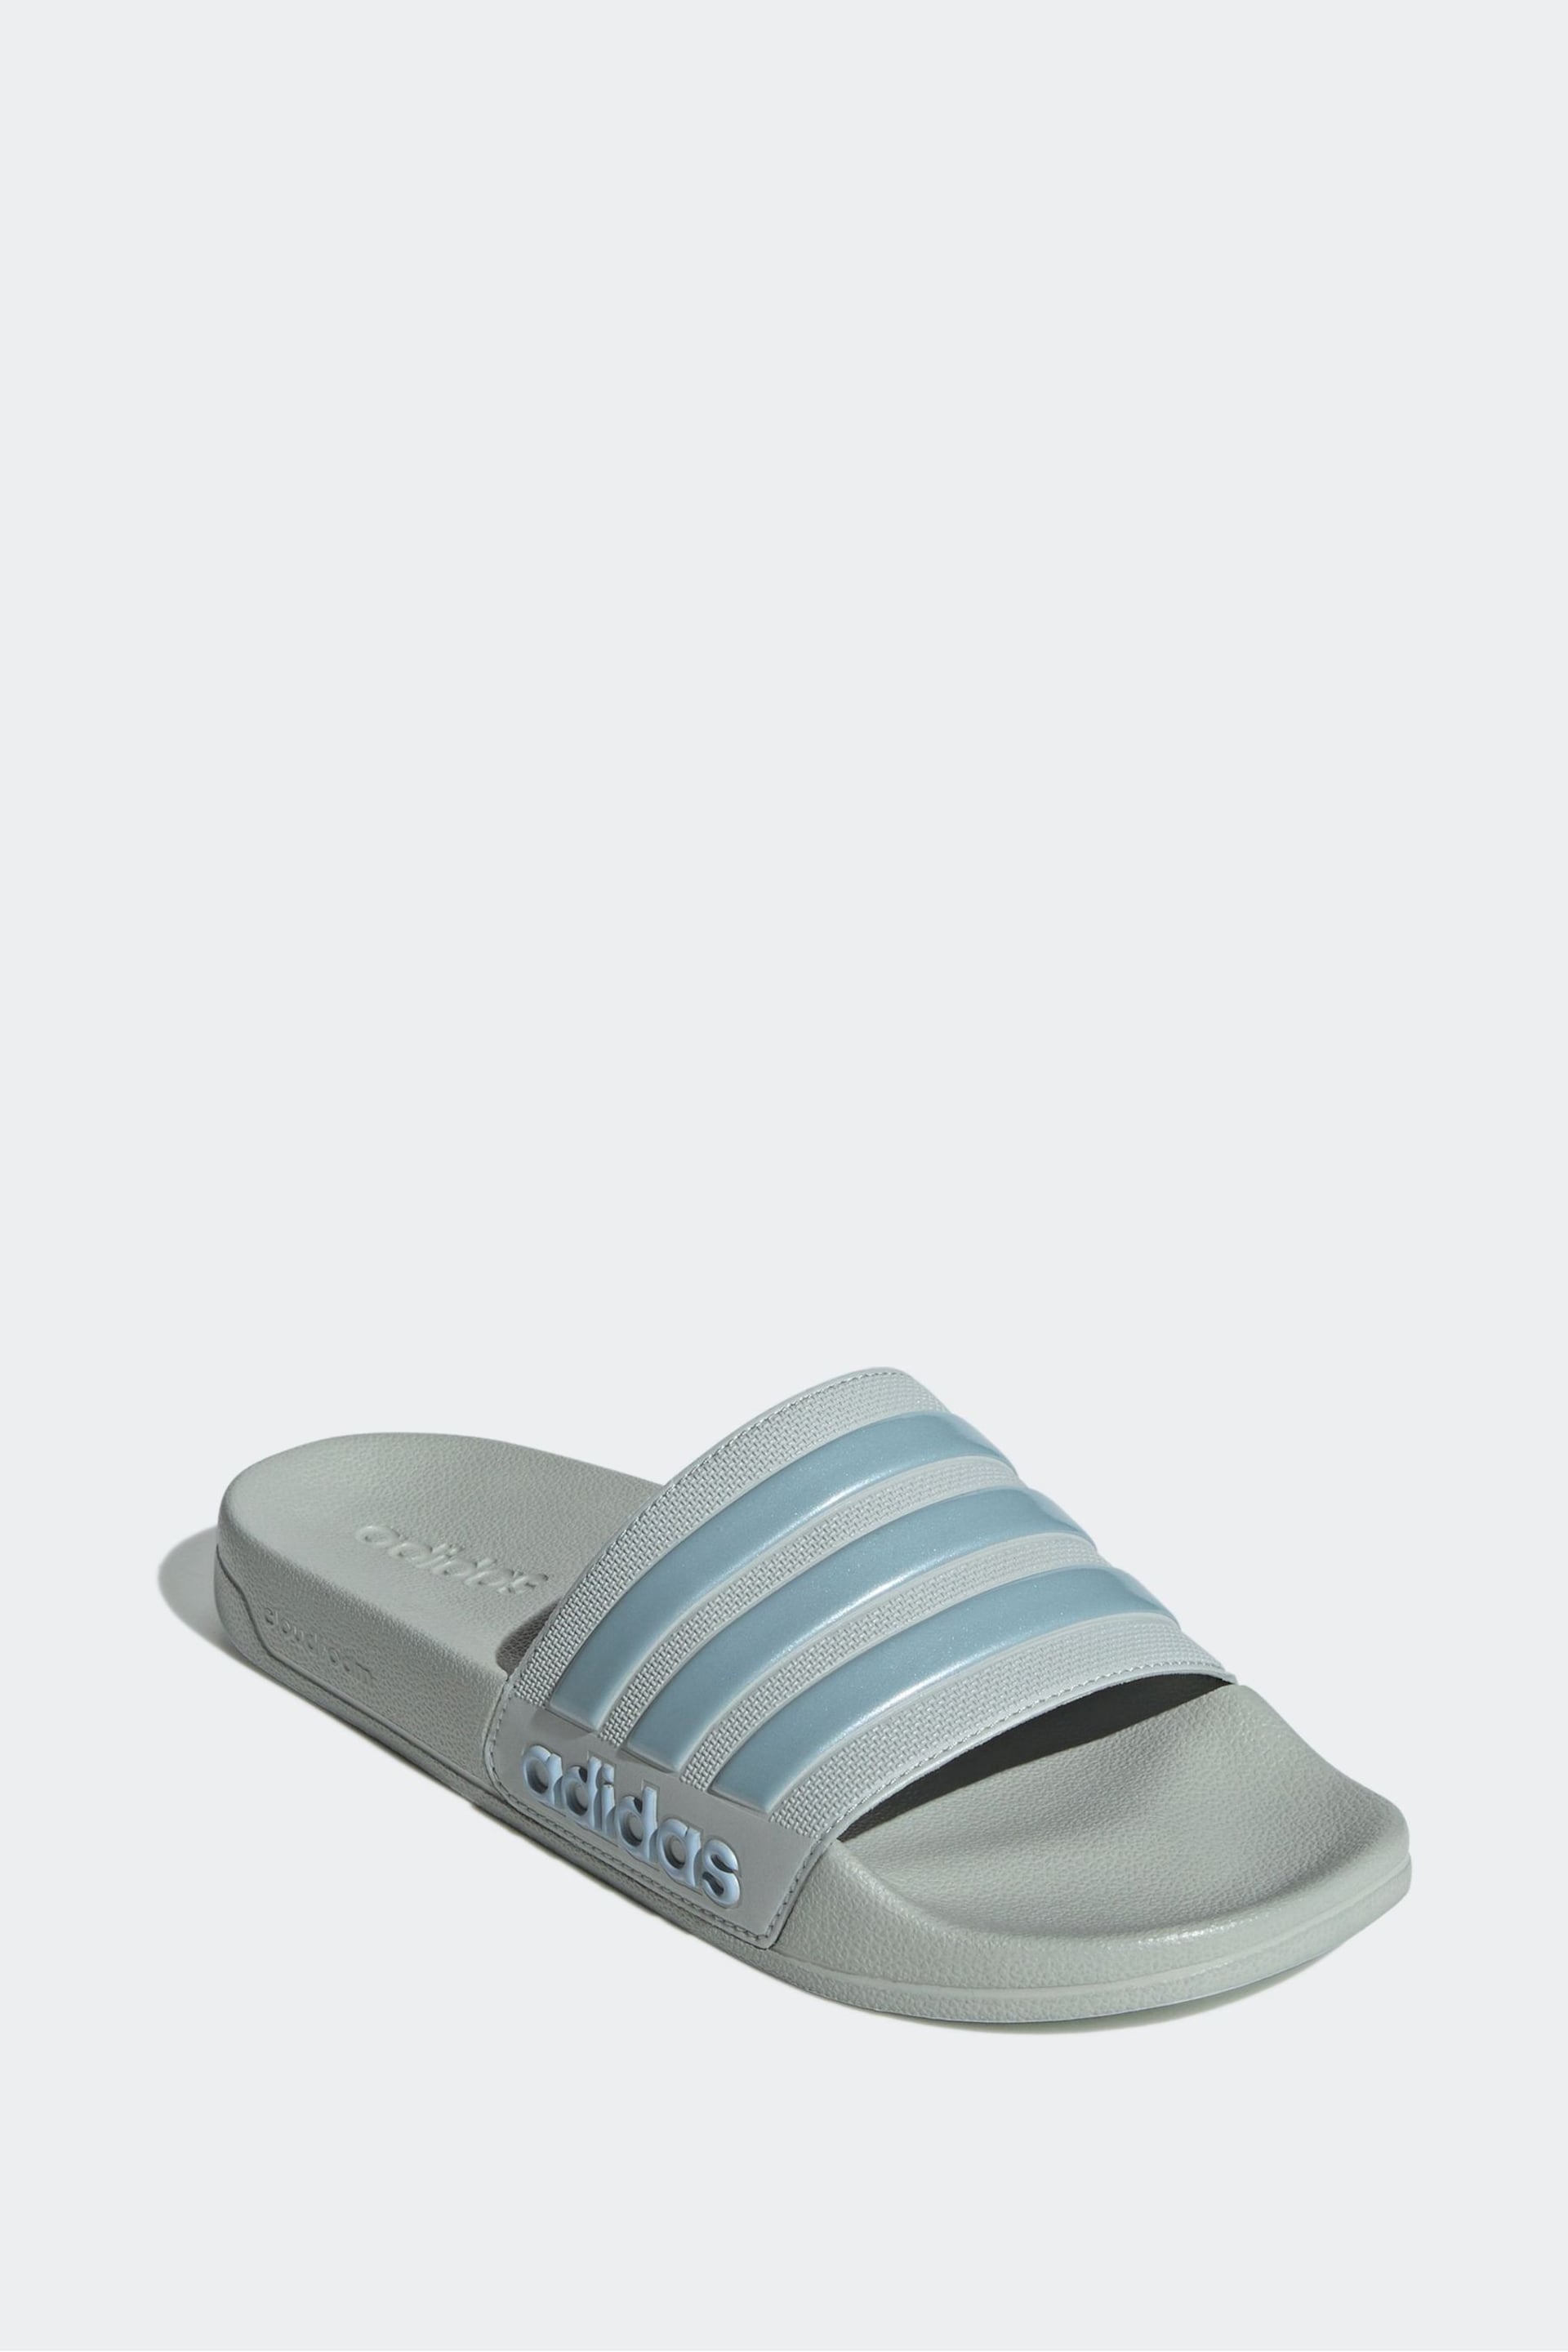 adidas Grey Adilette Shower Sliders - Image 3 of 6